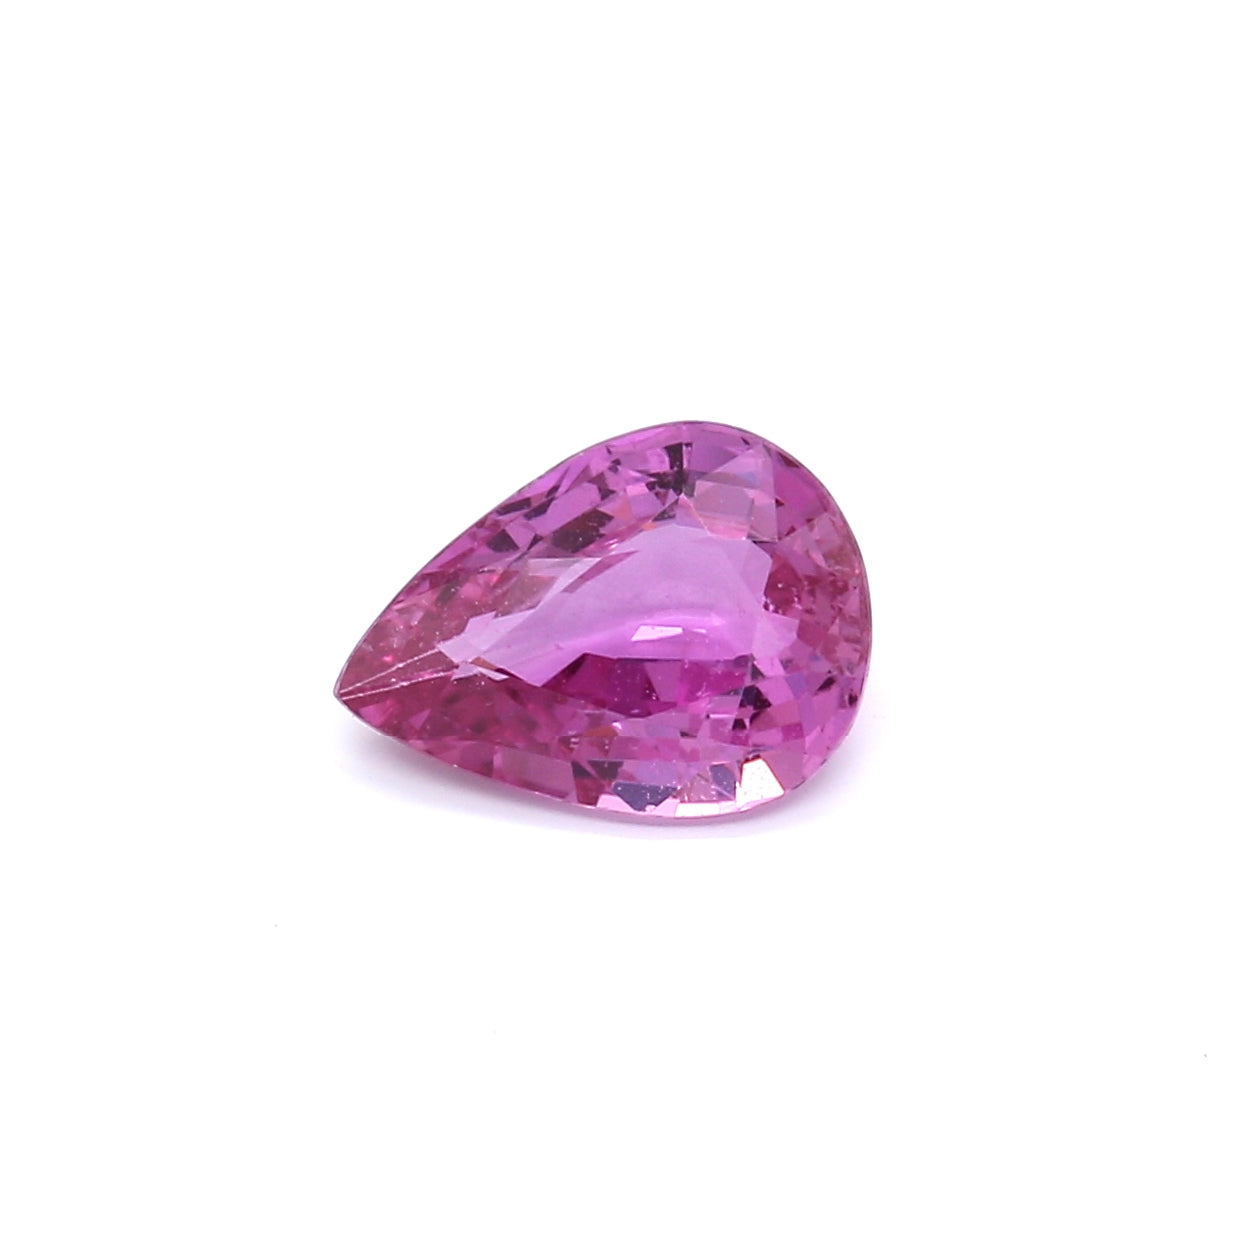 2.02ct Purplish Pink, Pear Shape Sapphire, Heated, Madagascar - 9.60 x 6.95 x 3.87mm